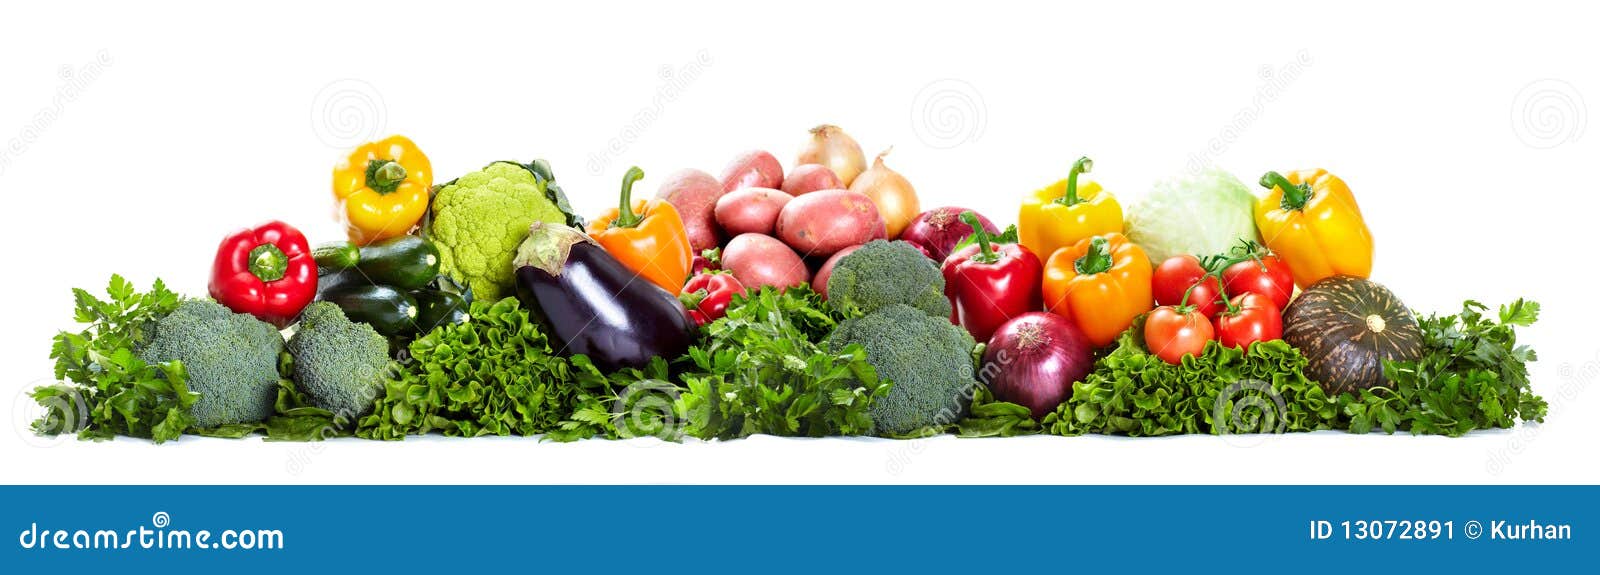 Légumes frais. image stock. Image du moisson, oignon - 13072891